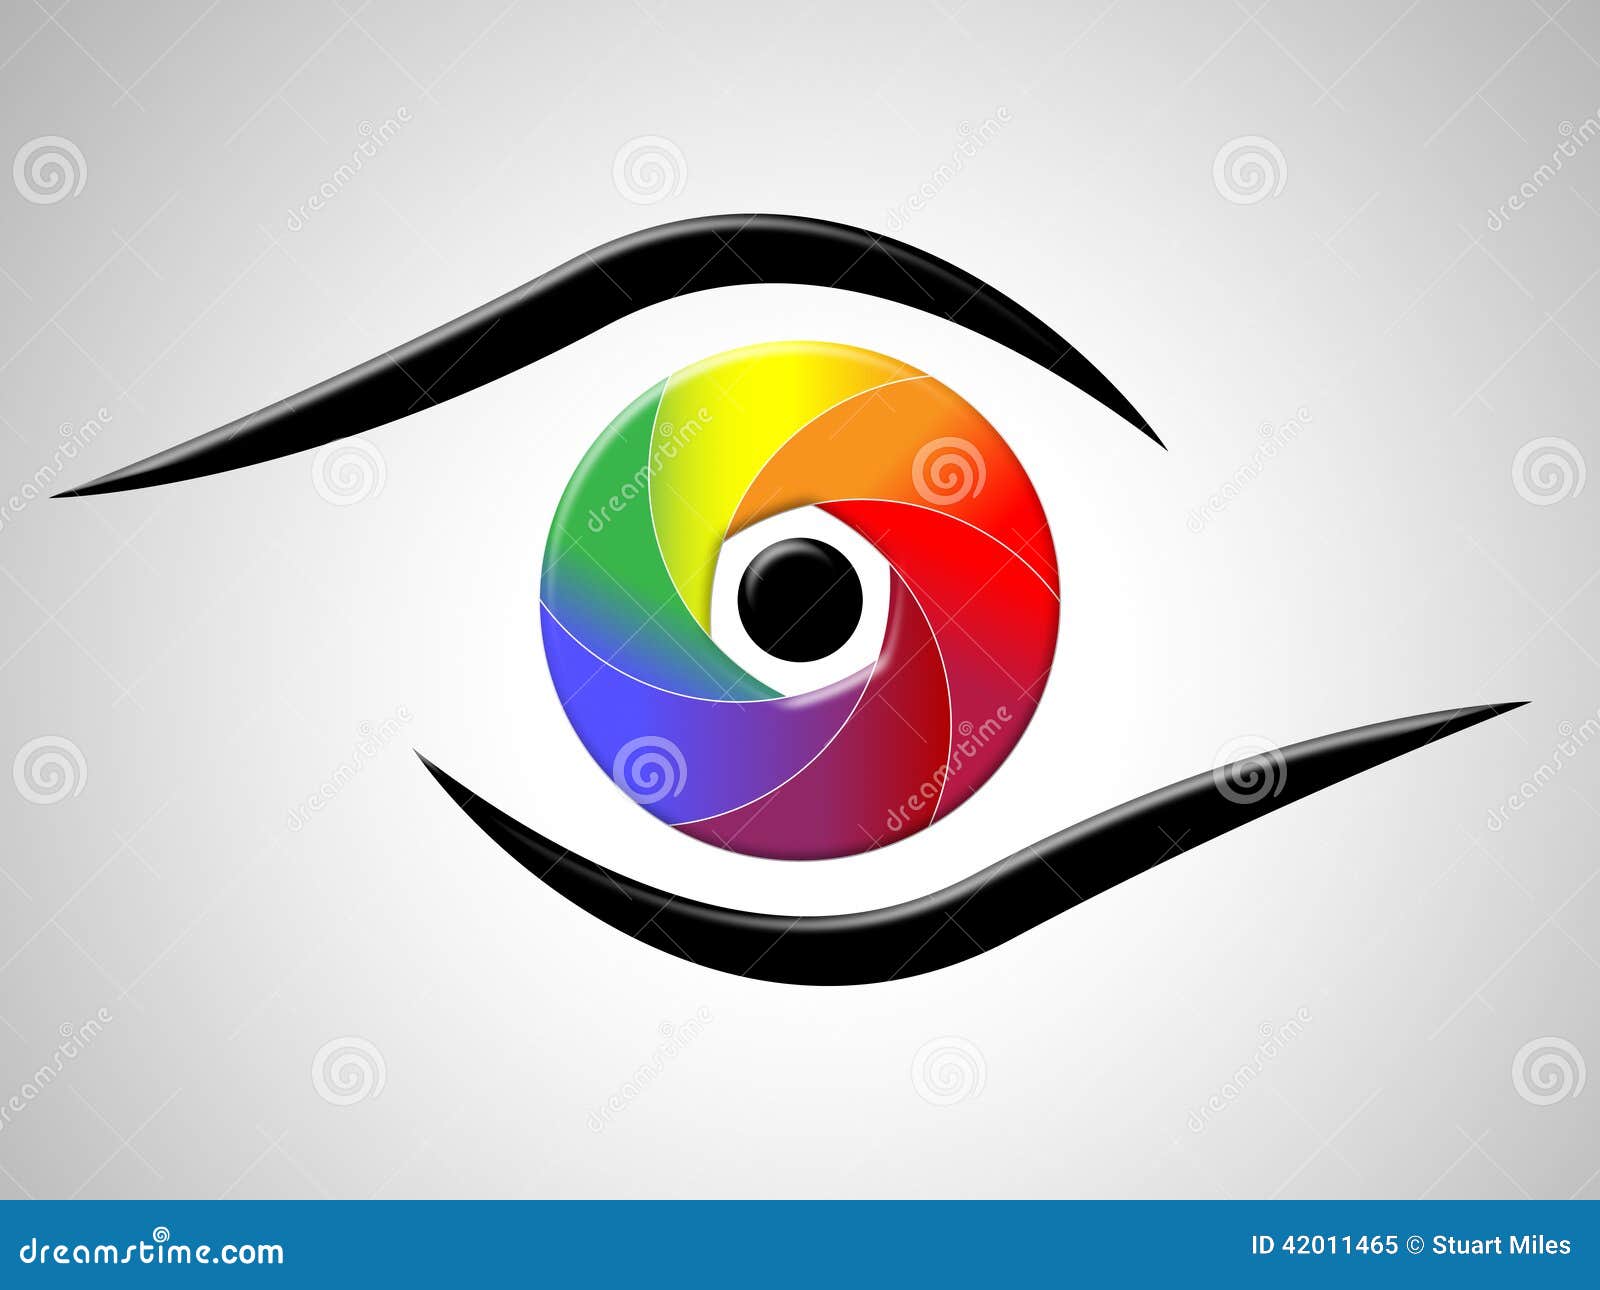 eye aperture shows colour splash and chromatic